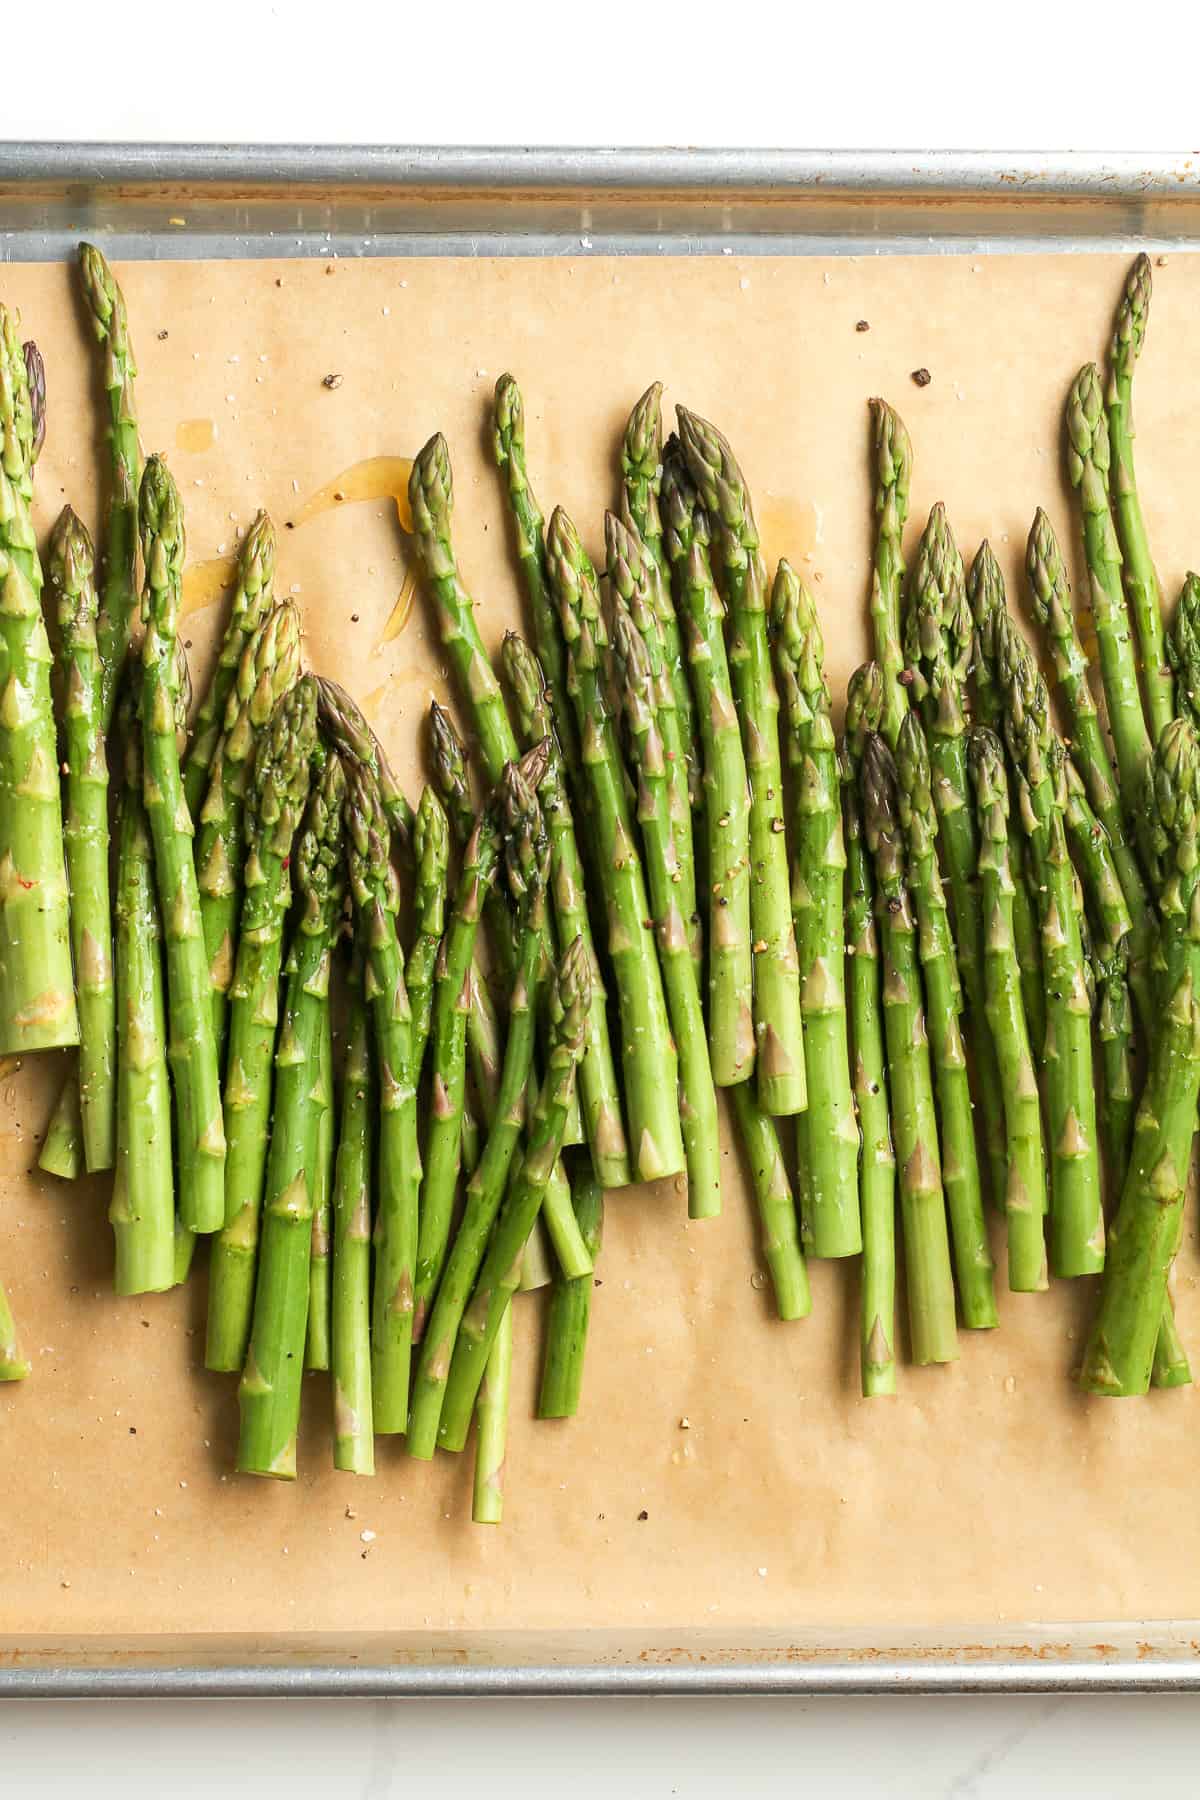 A pan of raw asparagus.